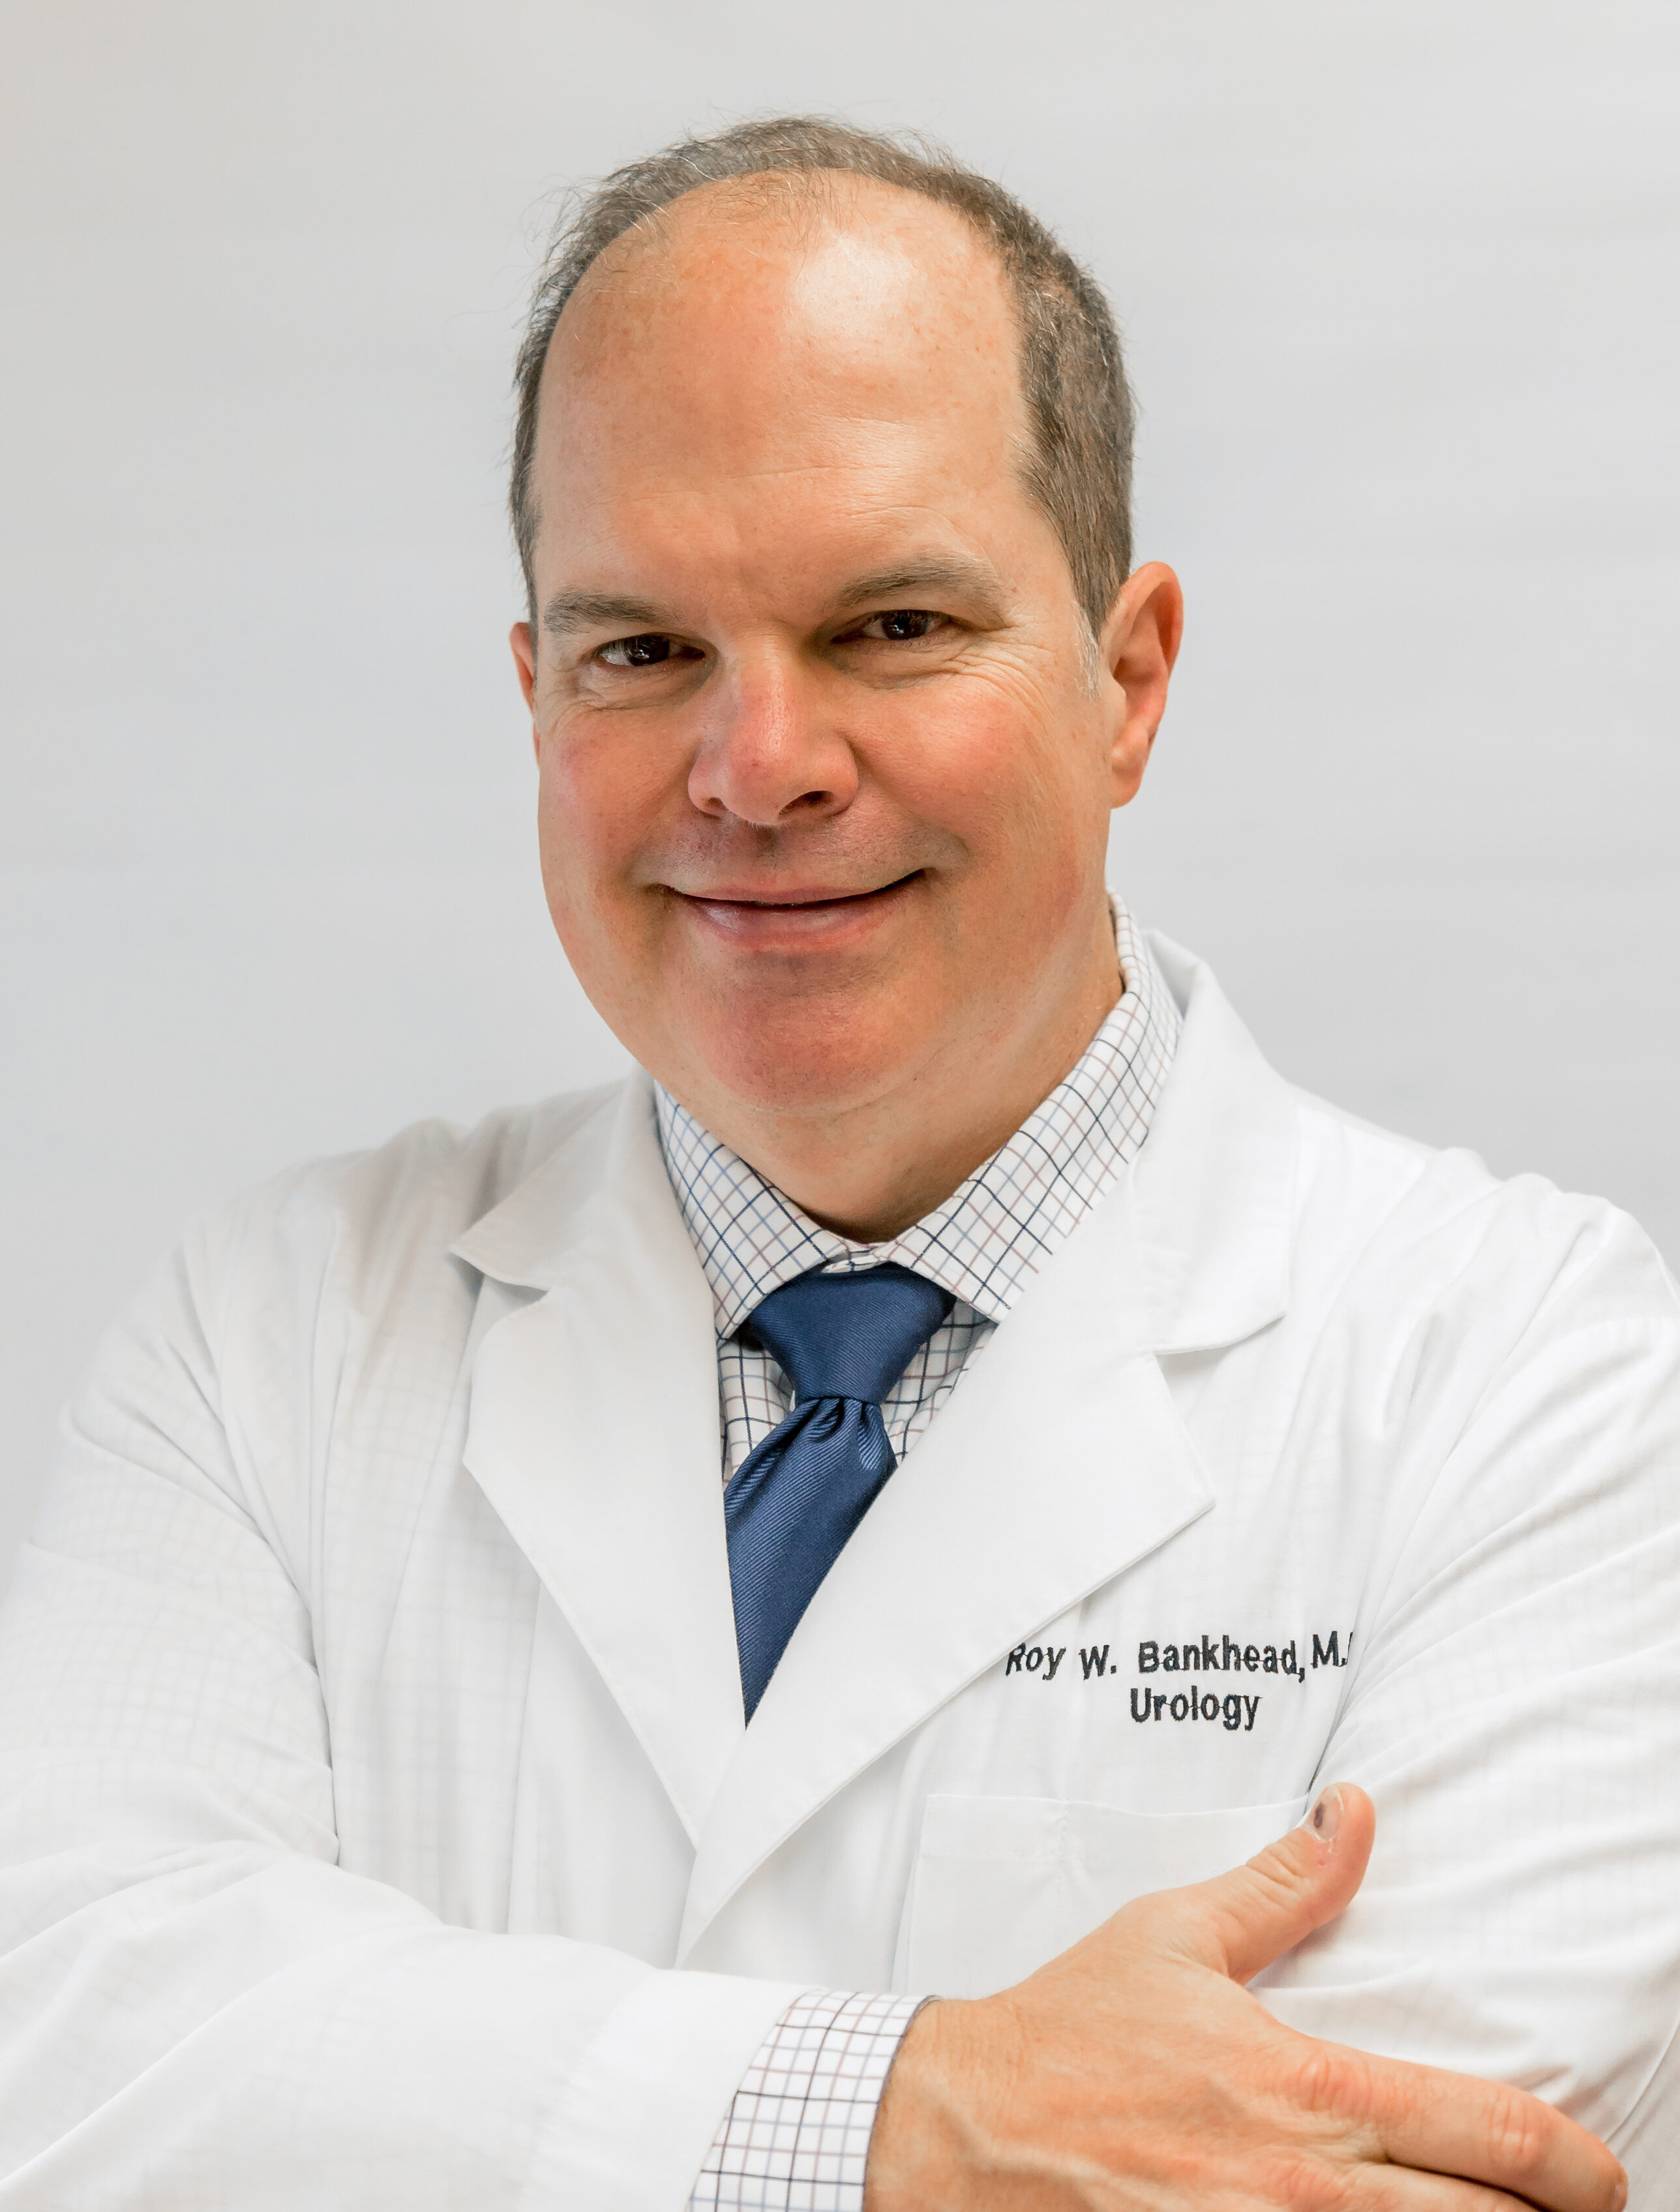 Dr. Roy Bankhead
Oklahoma City Urologist